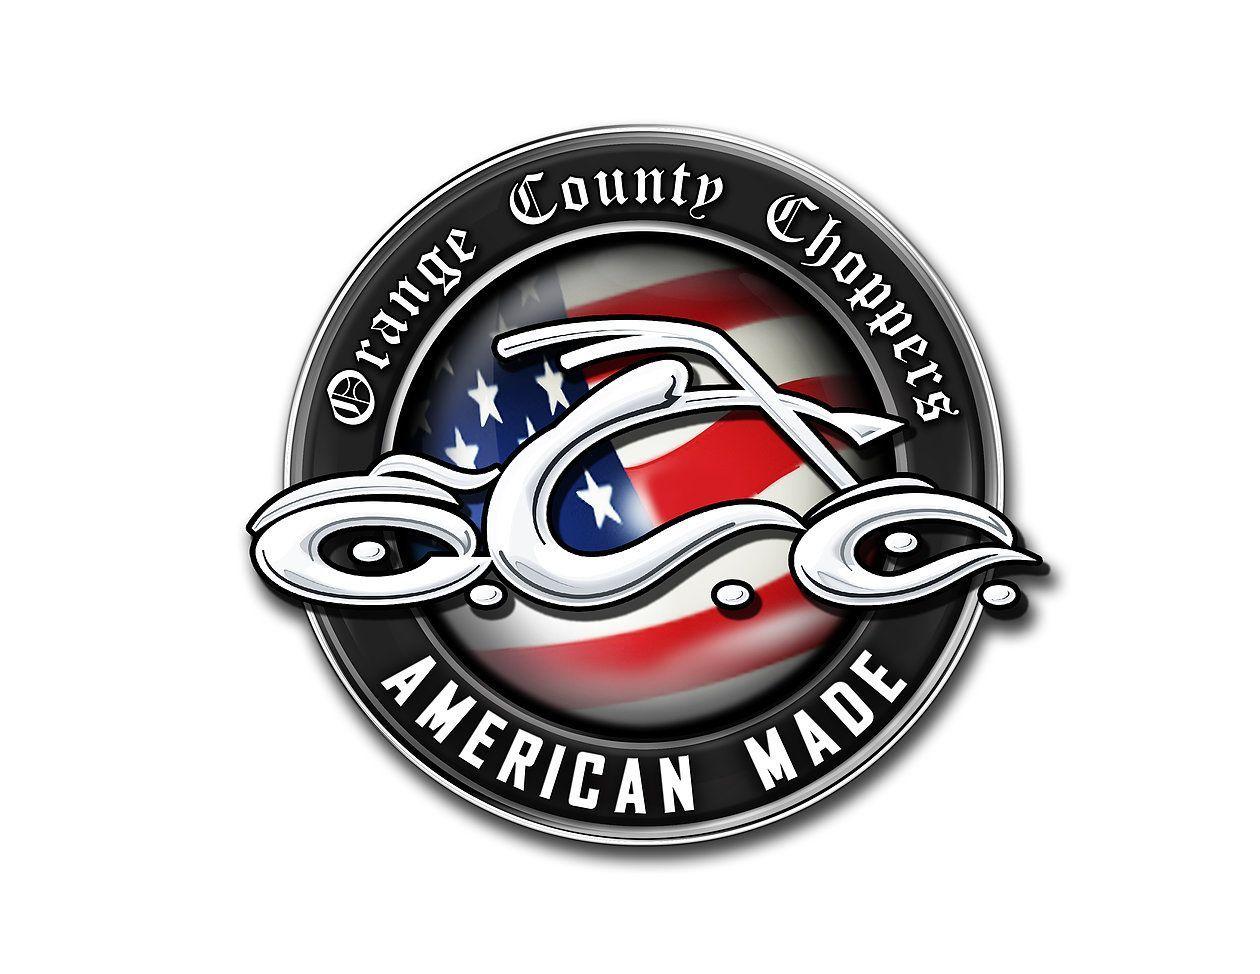 Chopper Logo - Resultado de imagen para orange county chopper logo | Harley ...